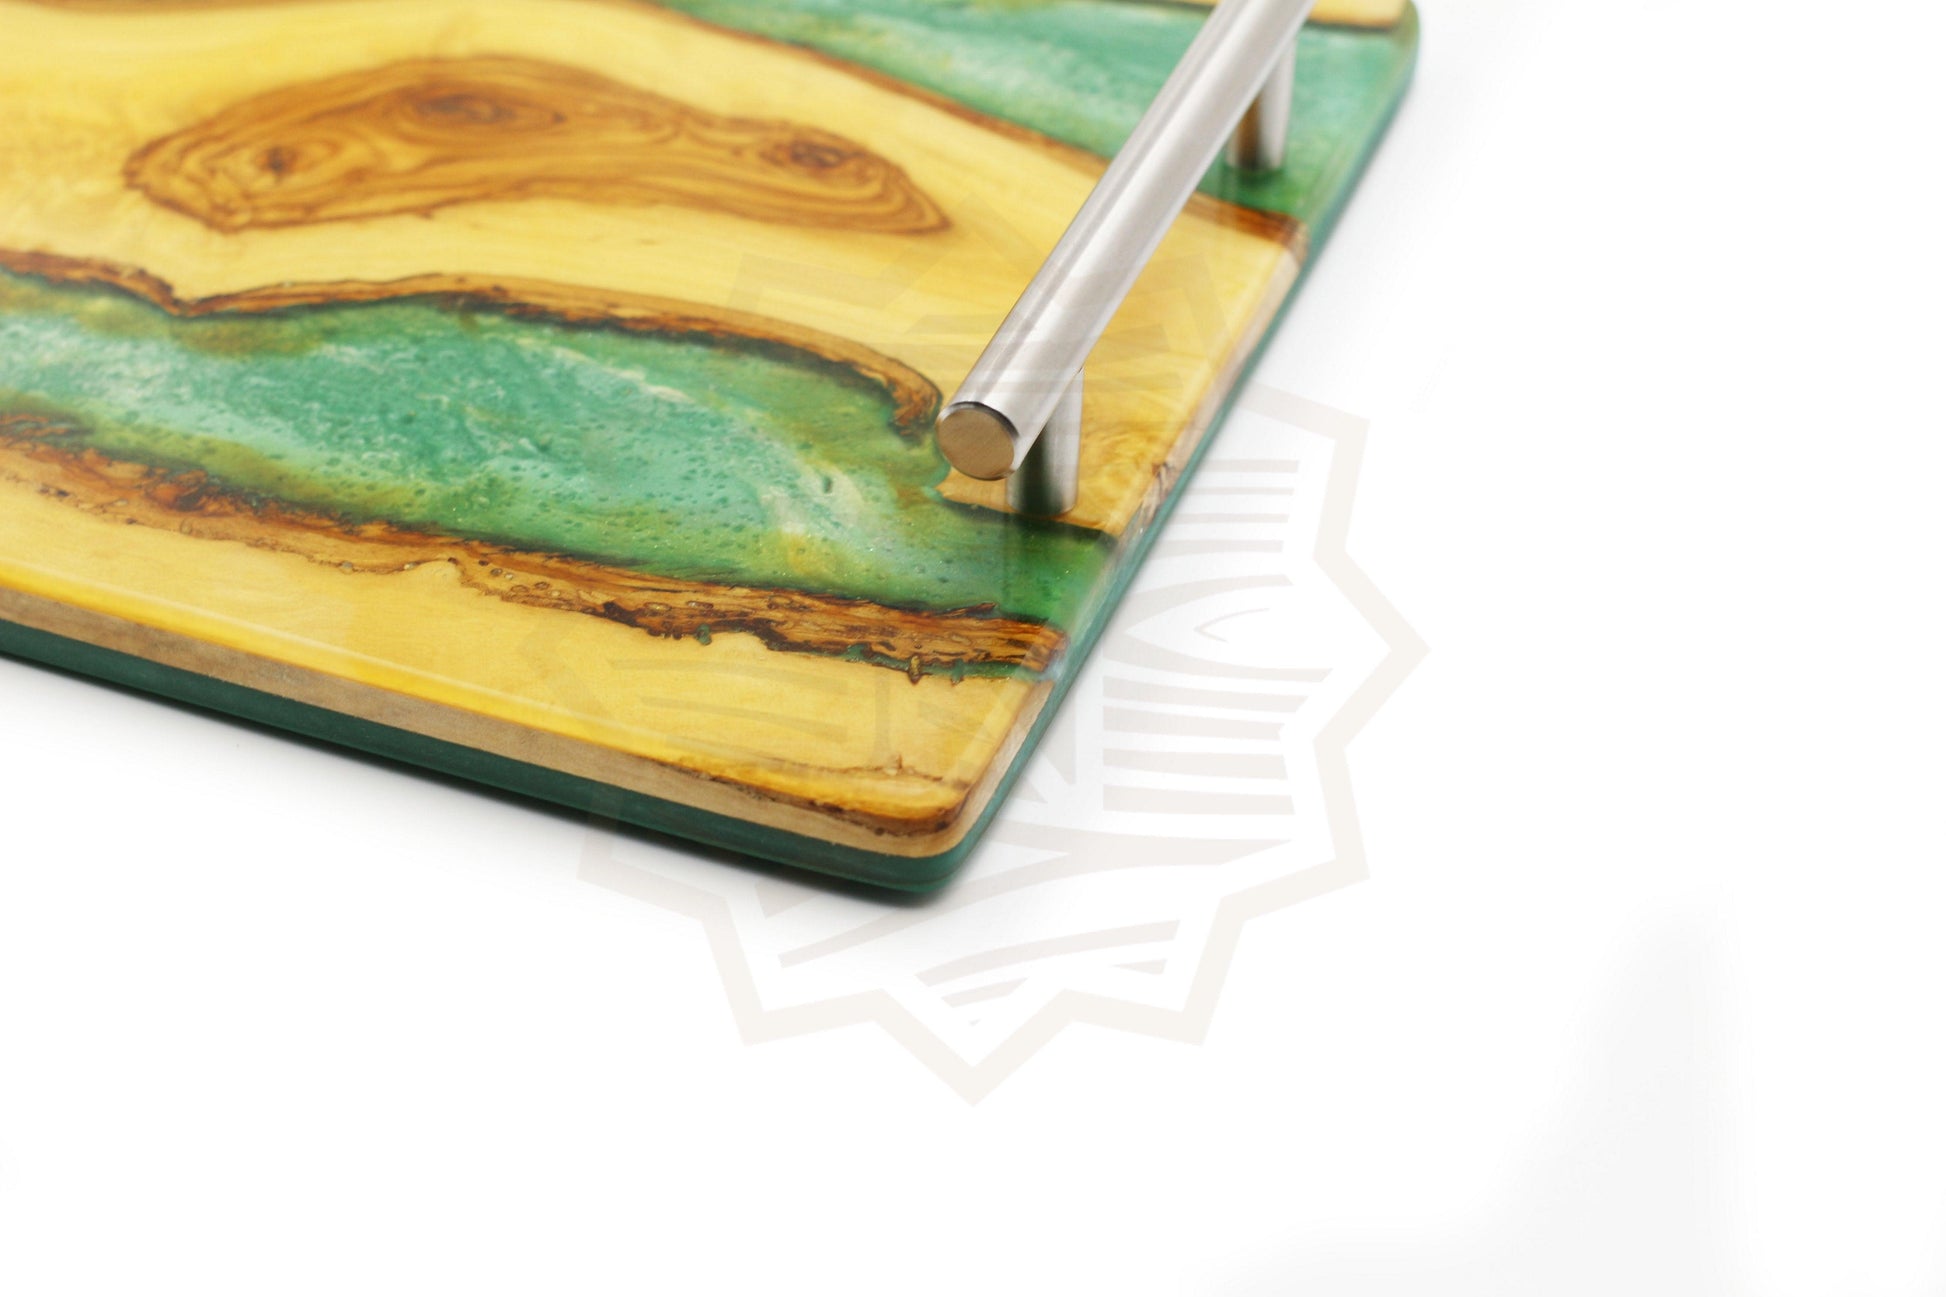 Olive wood tray designed for elegant presentation with sturdy handles